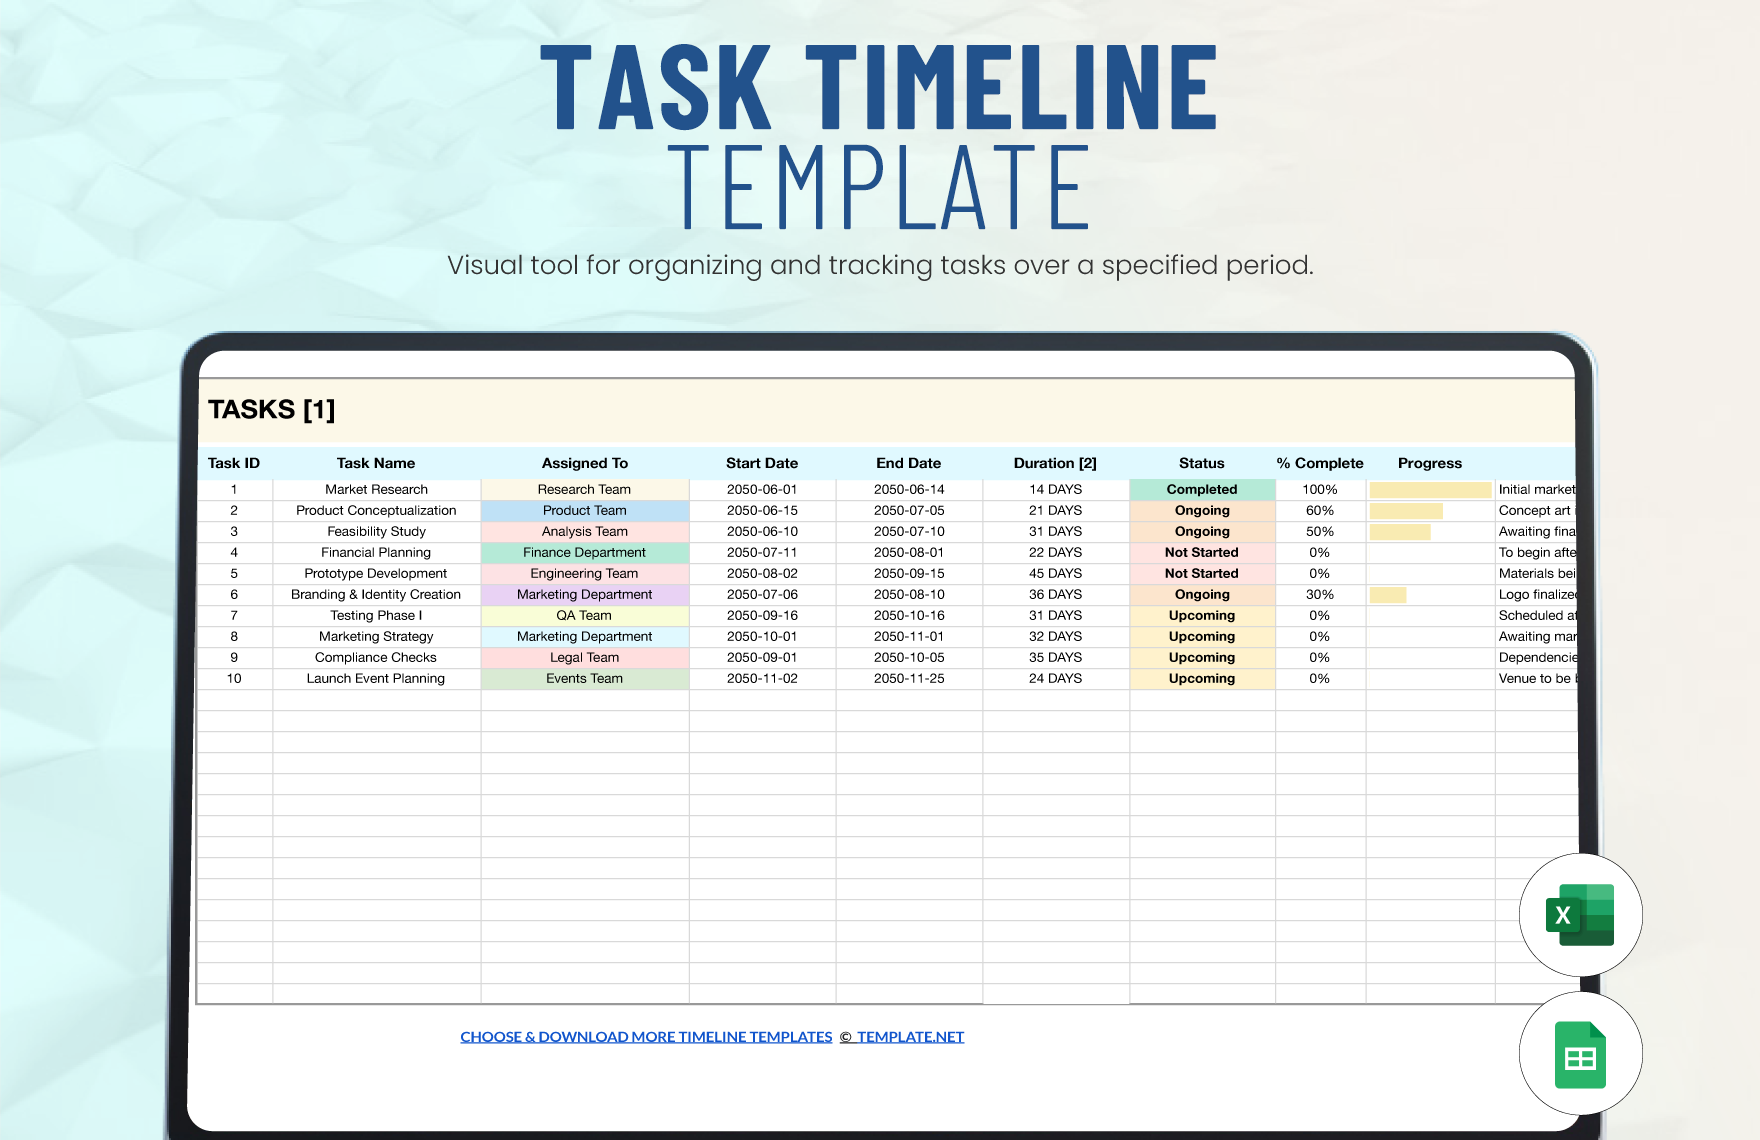 Free Task Timeline Template in Excel, Google Sheets